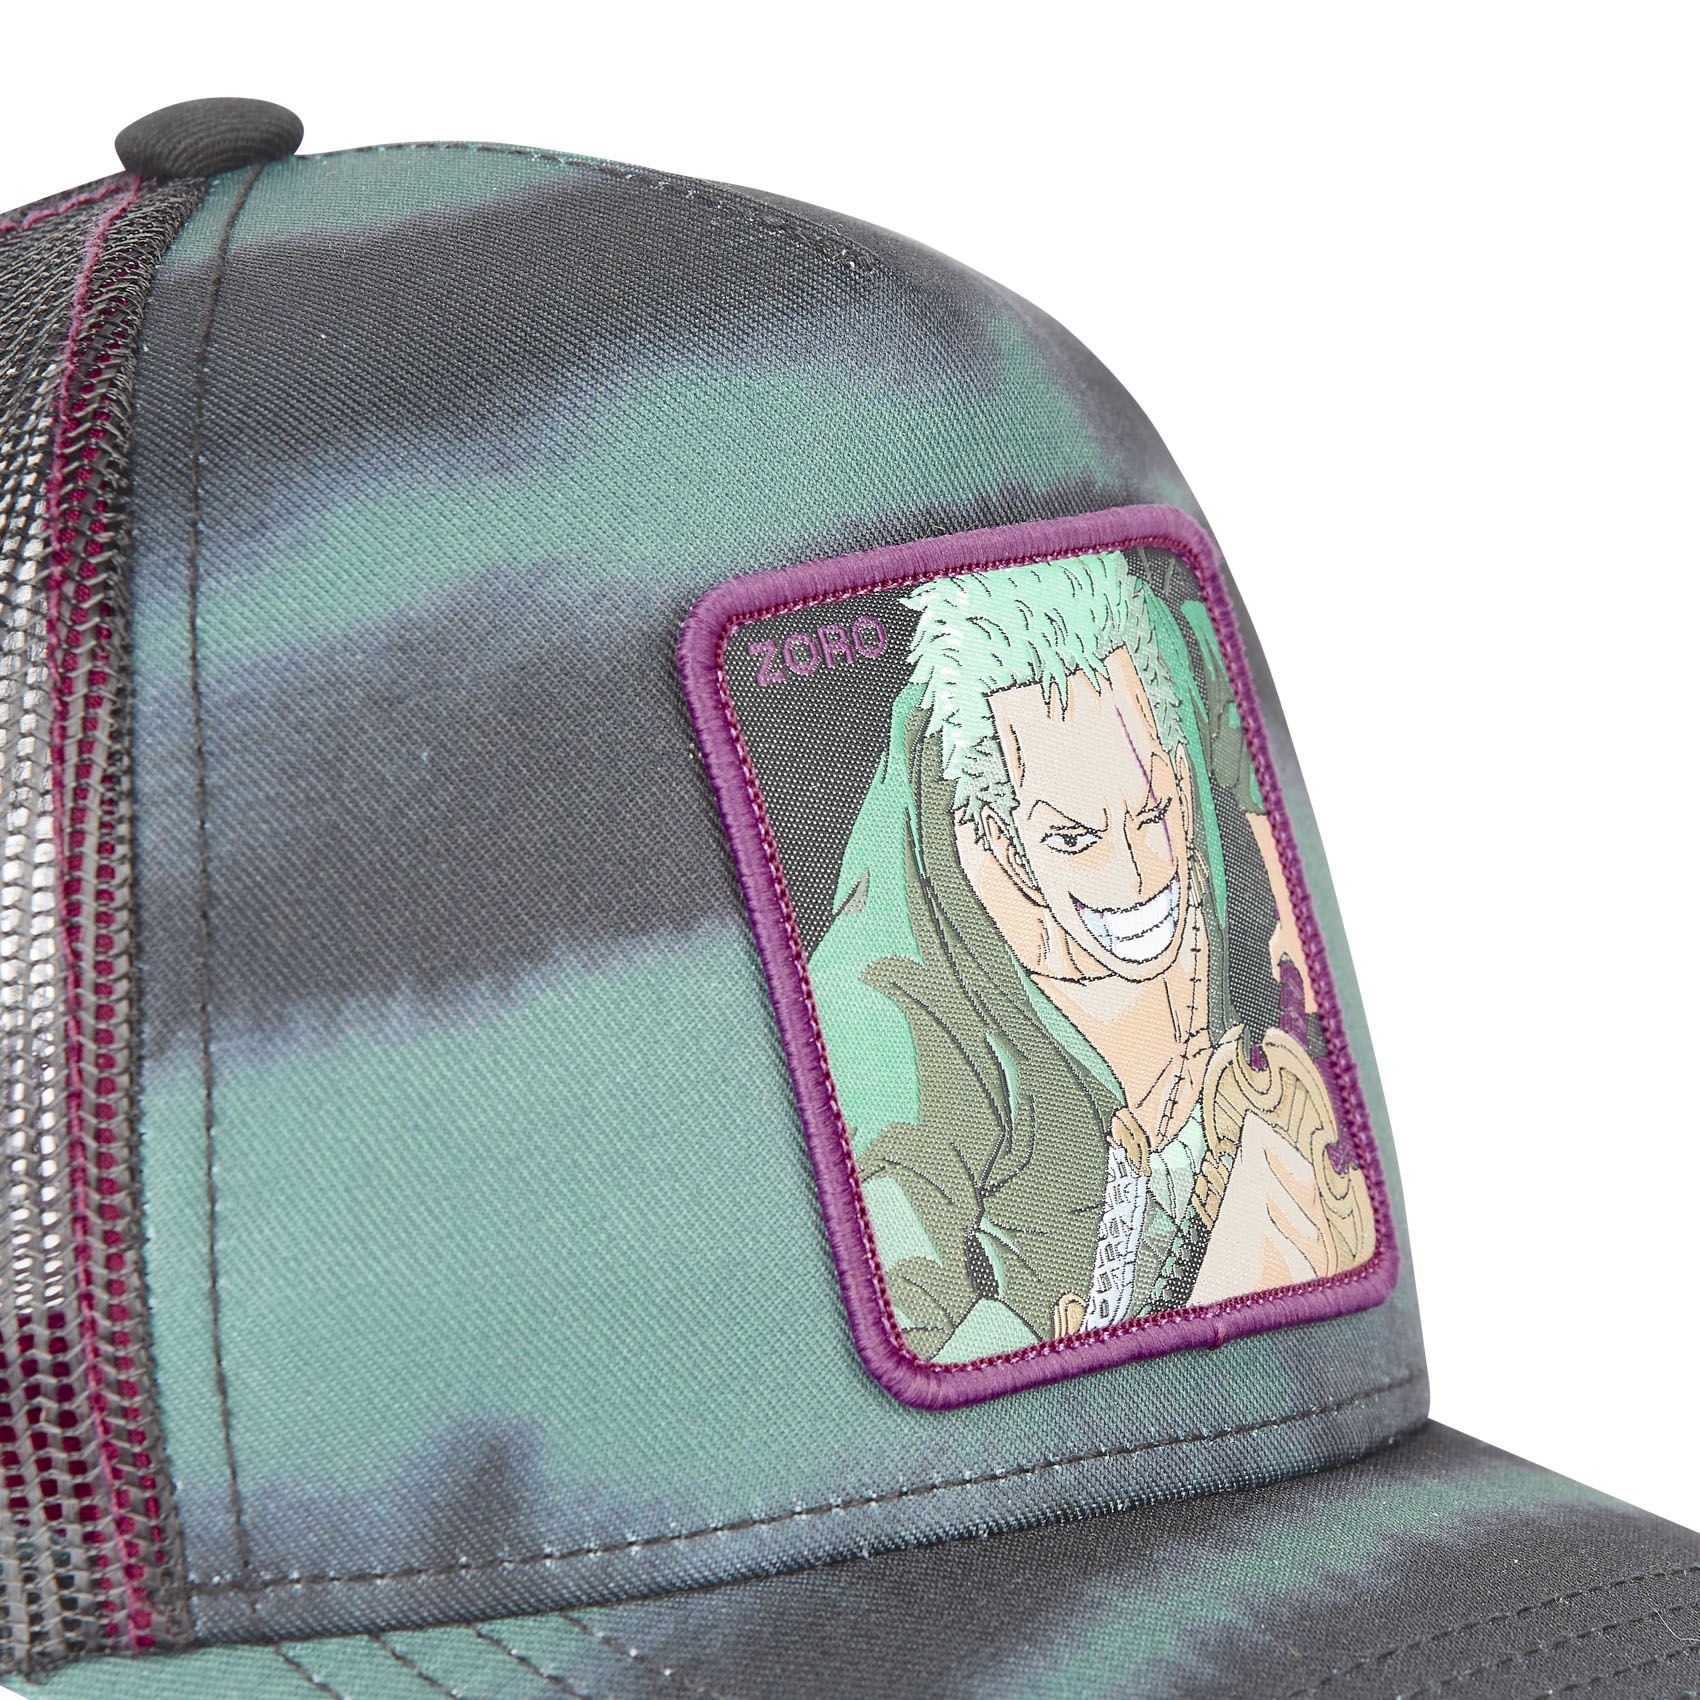 Zoro One Piece Green Black Trucker Cap Capslab